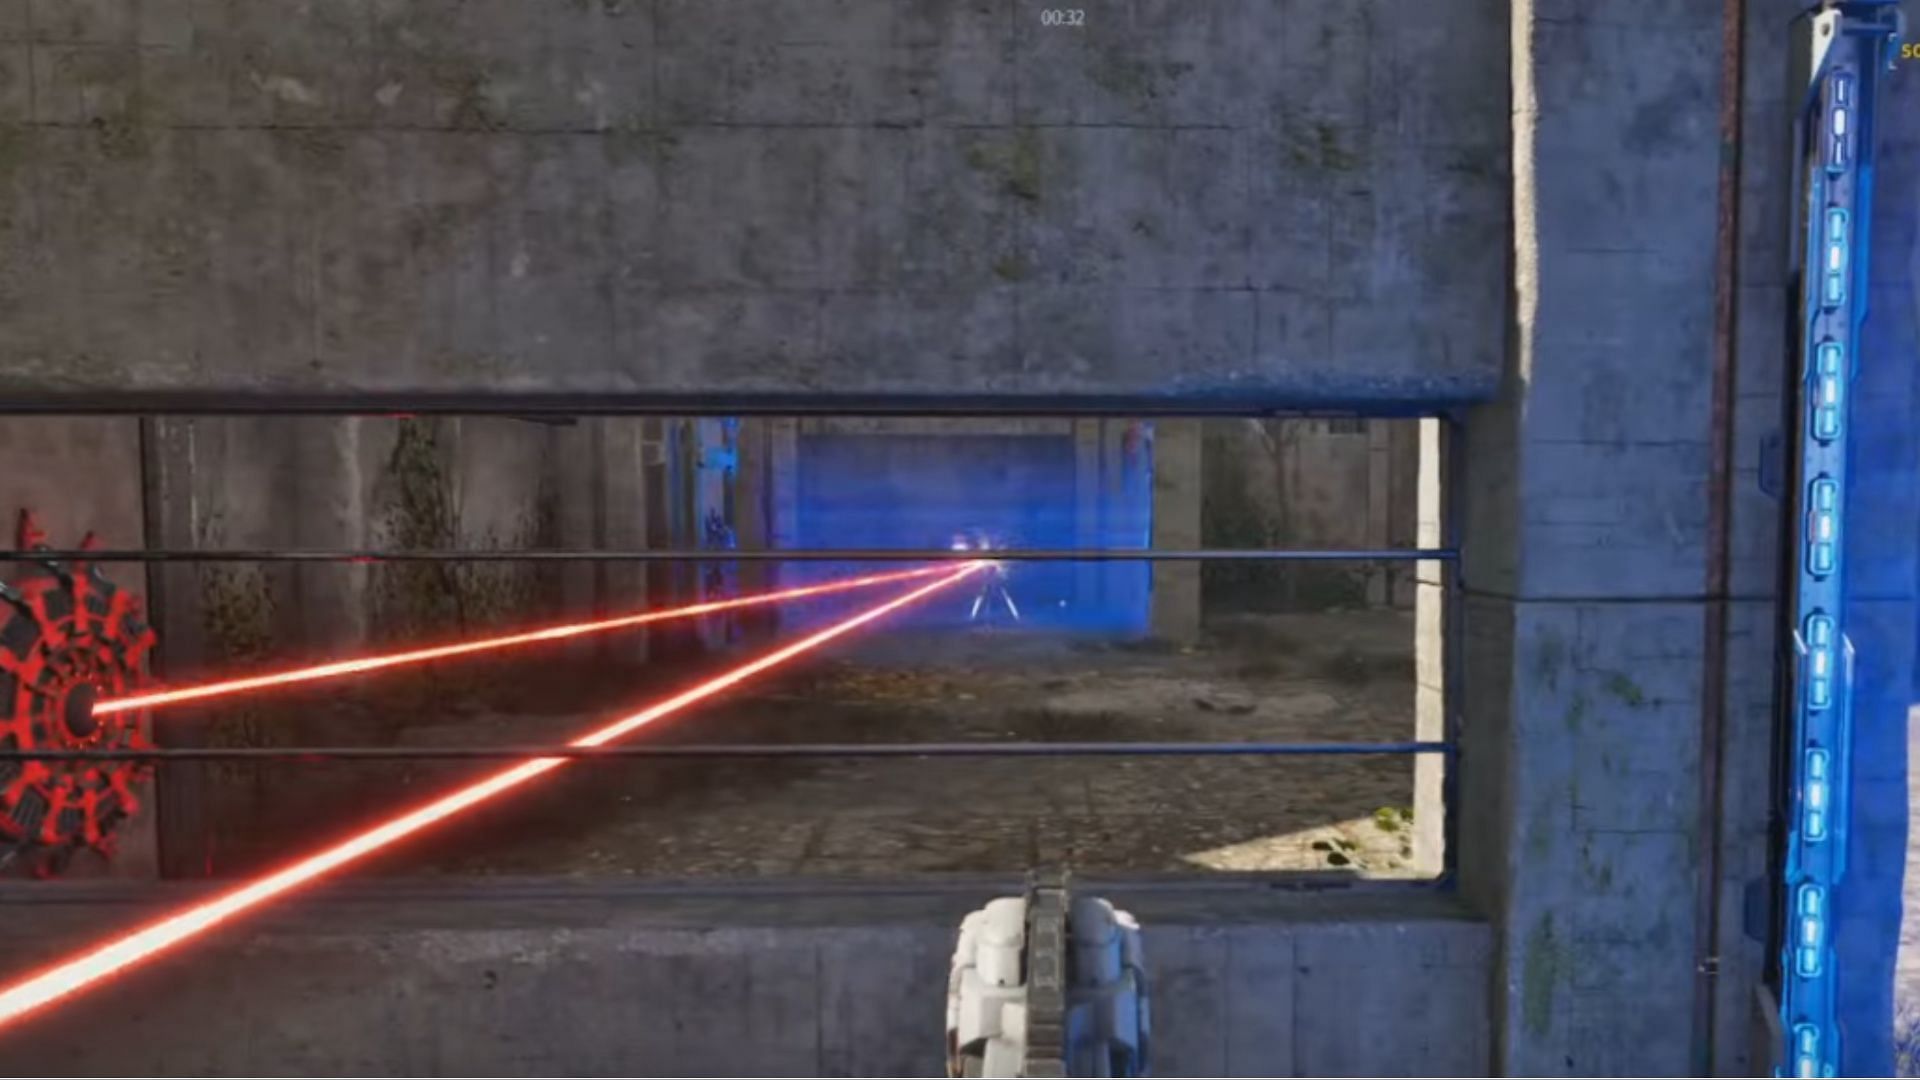 The jammer will disable the laser barrier. (Image via Devolver Digital)